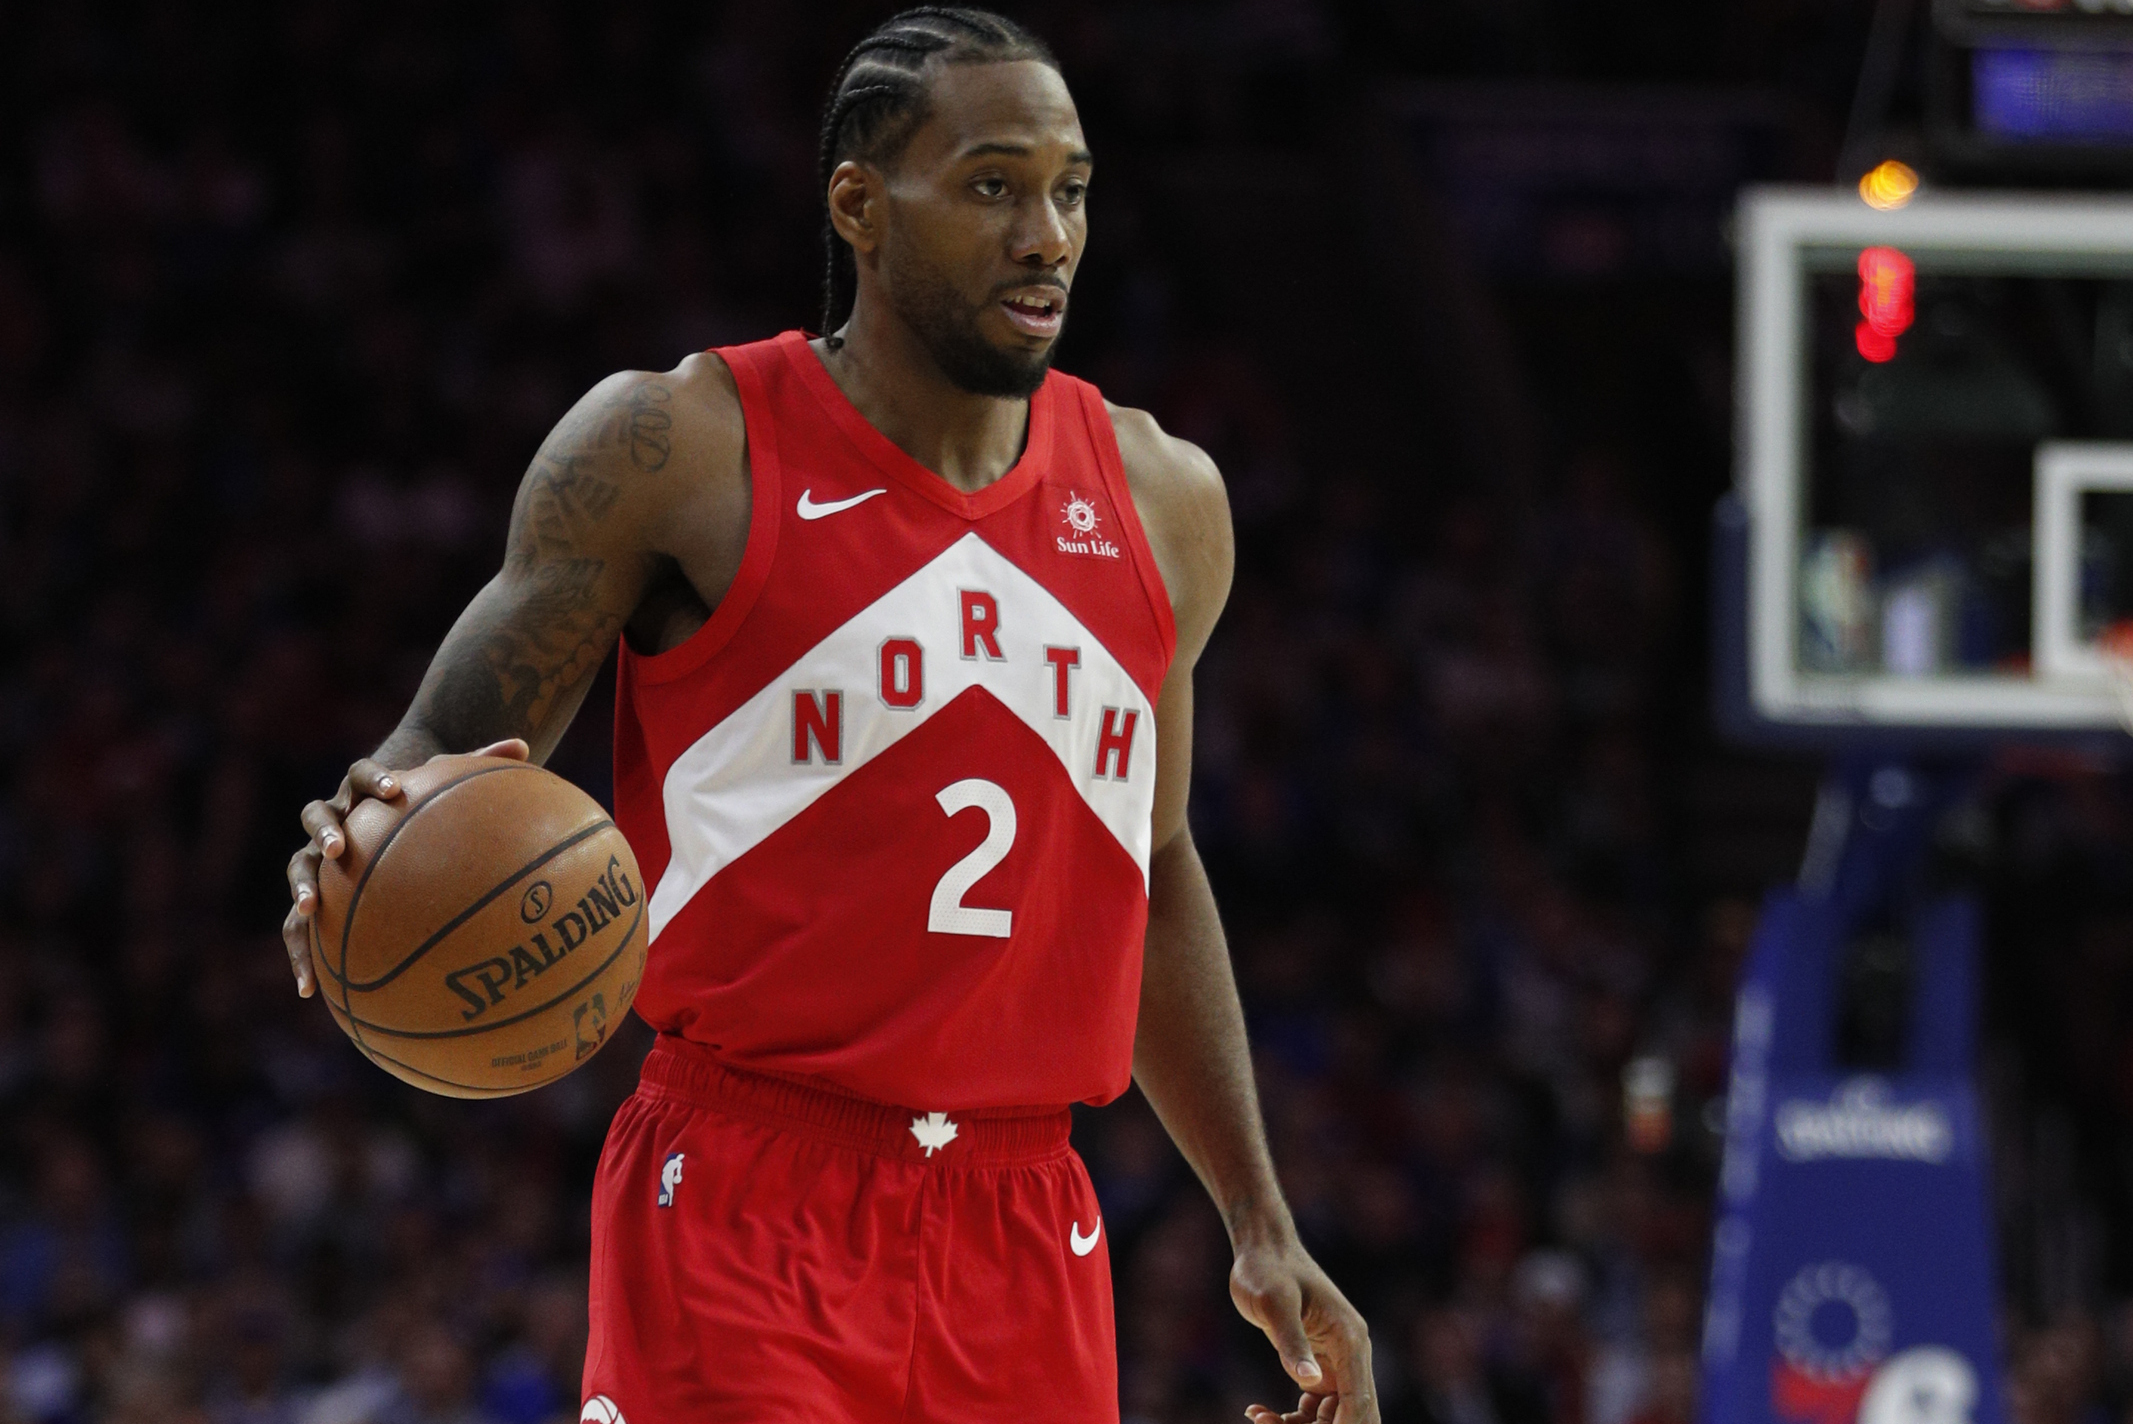 Raptors vs. Bucks results: Toronto wins 100-94, head to 2019 NBA